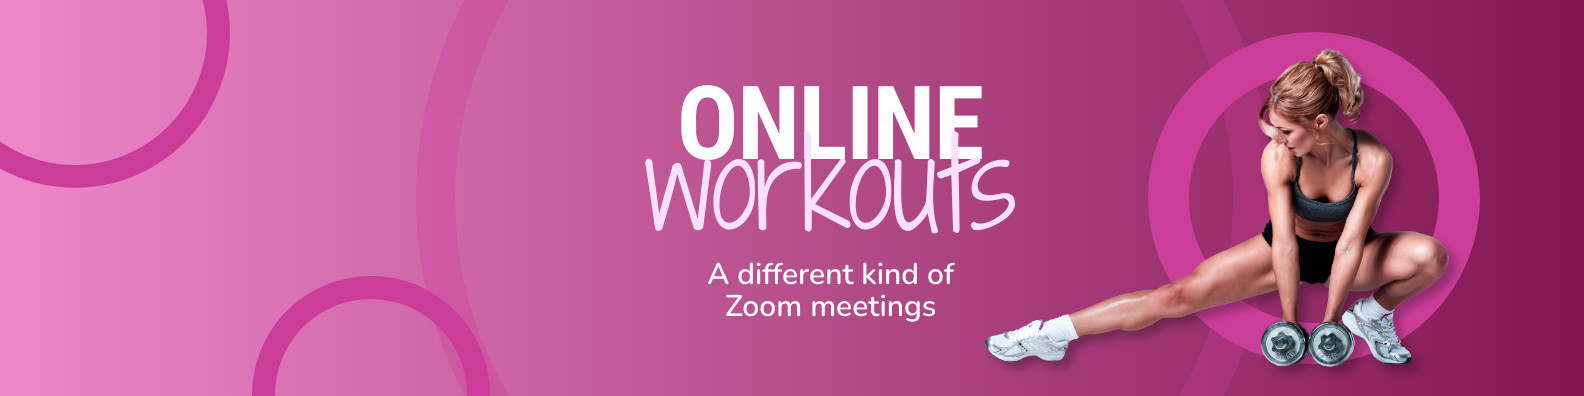 Online Zoom Workouts Linkedin Profile BG